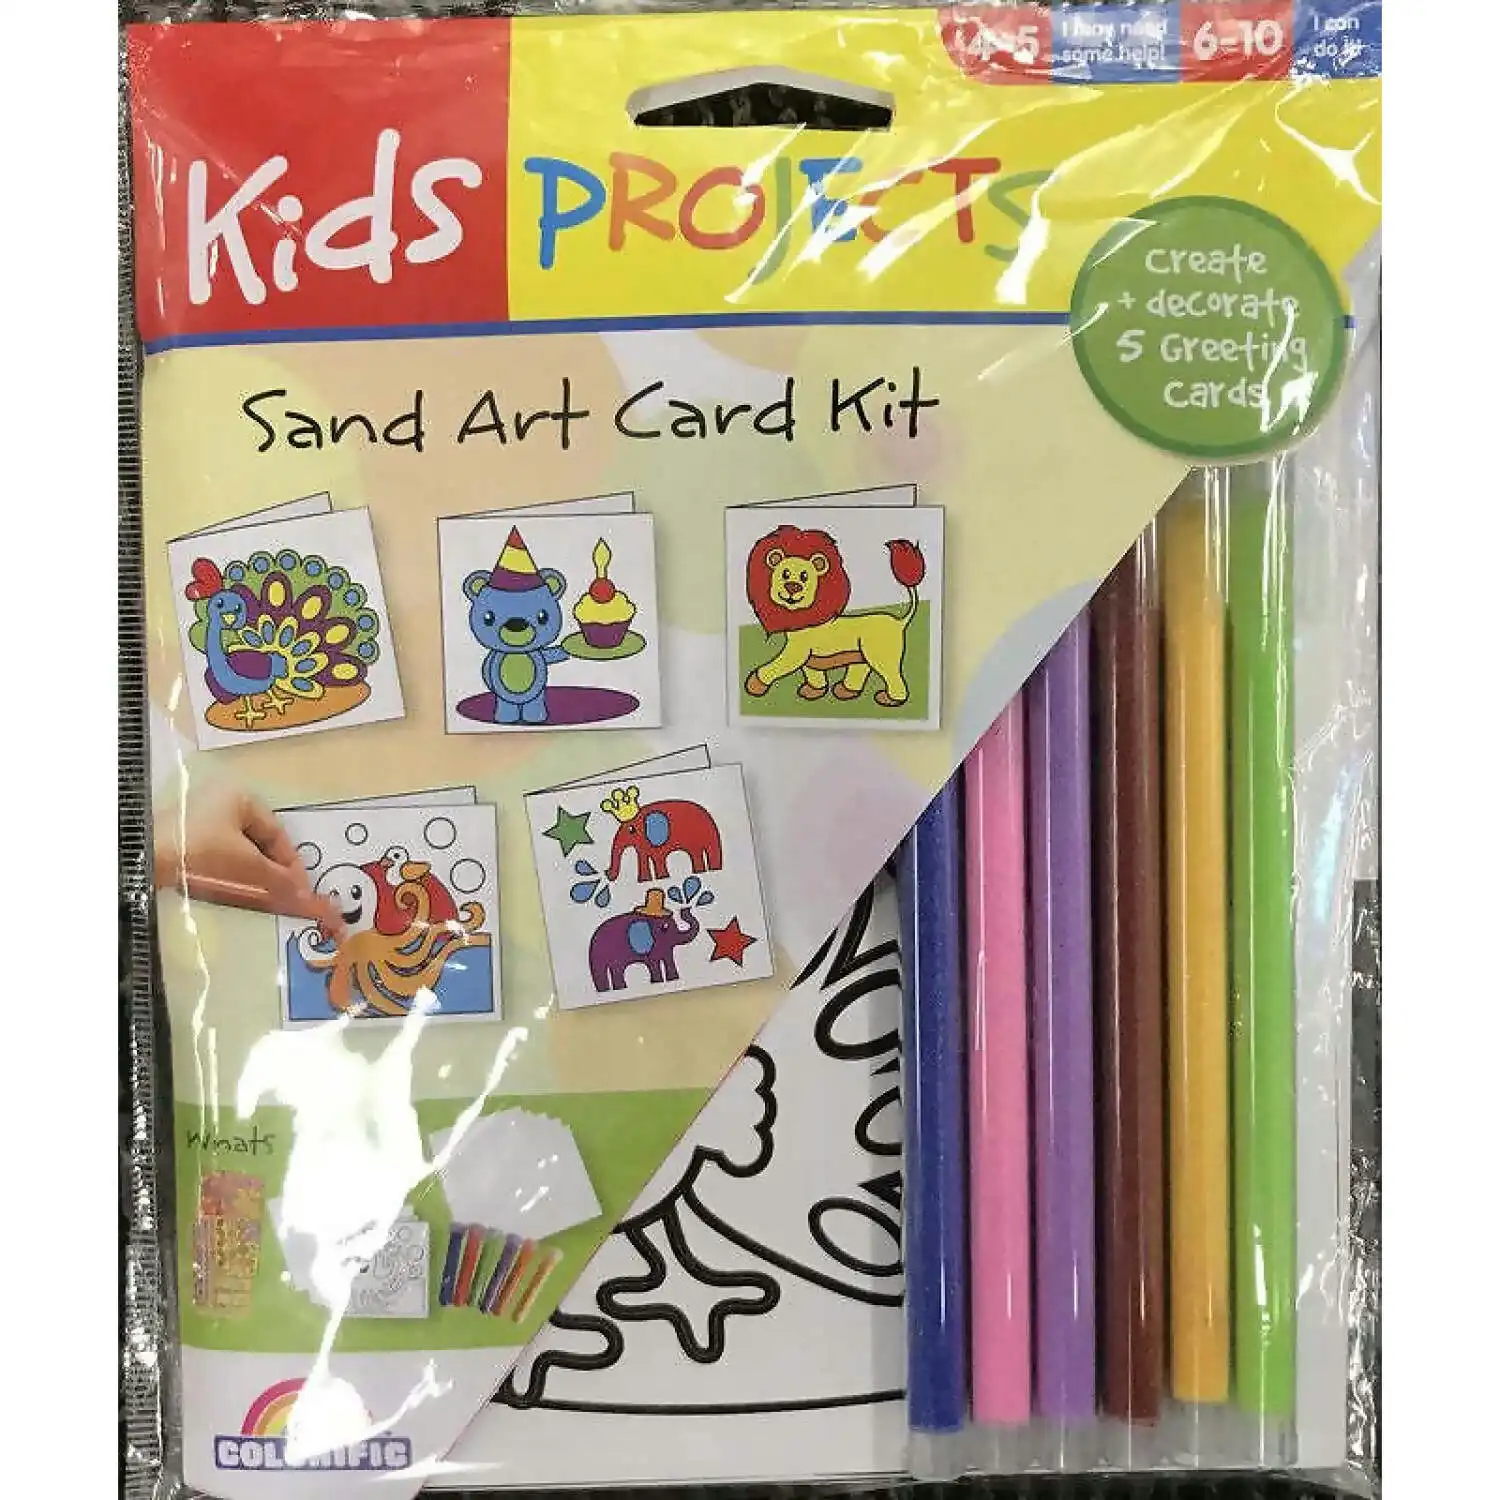 Kids Projects - Sand Art Card Kit